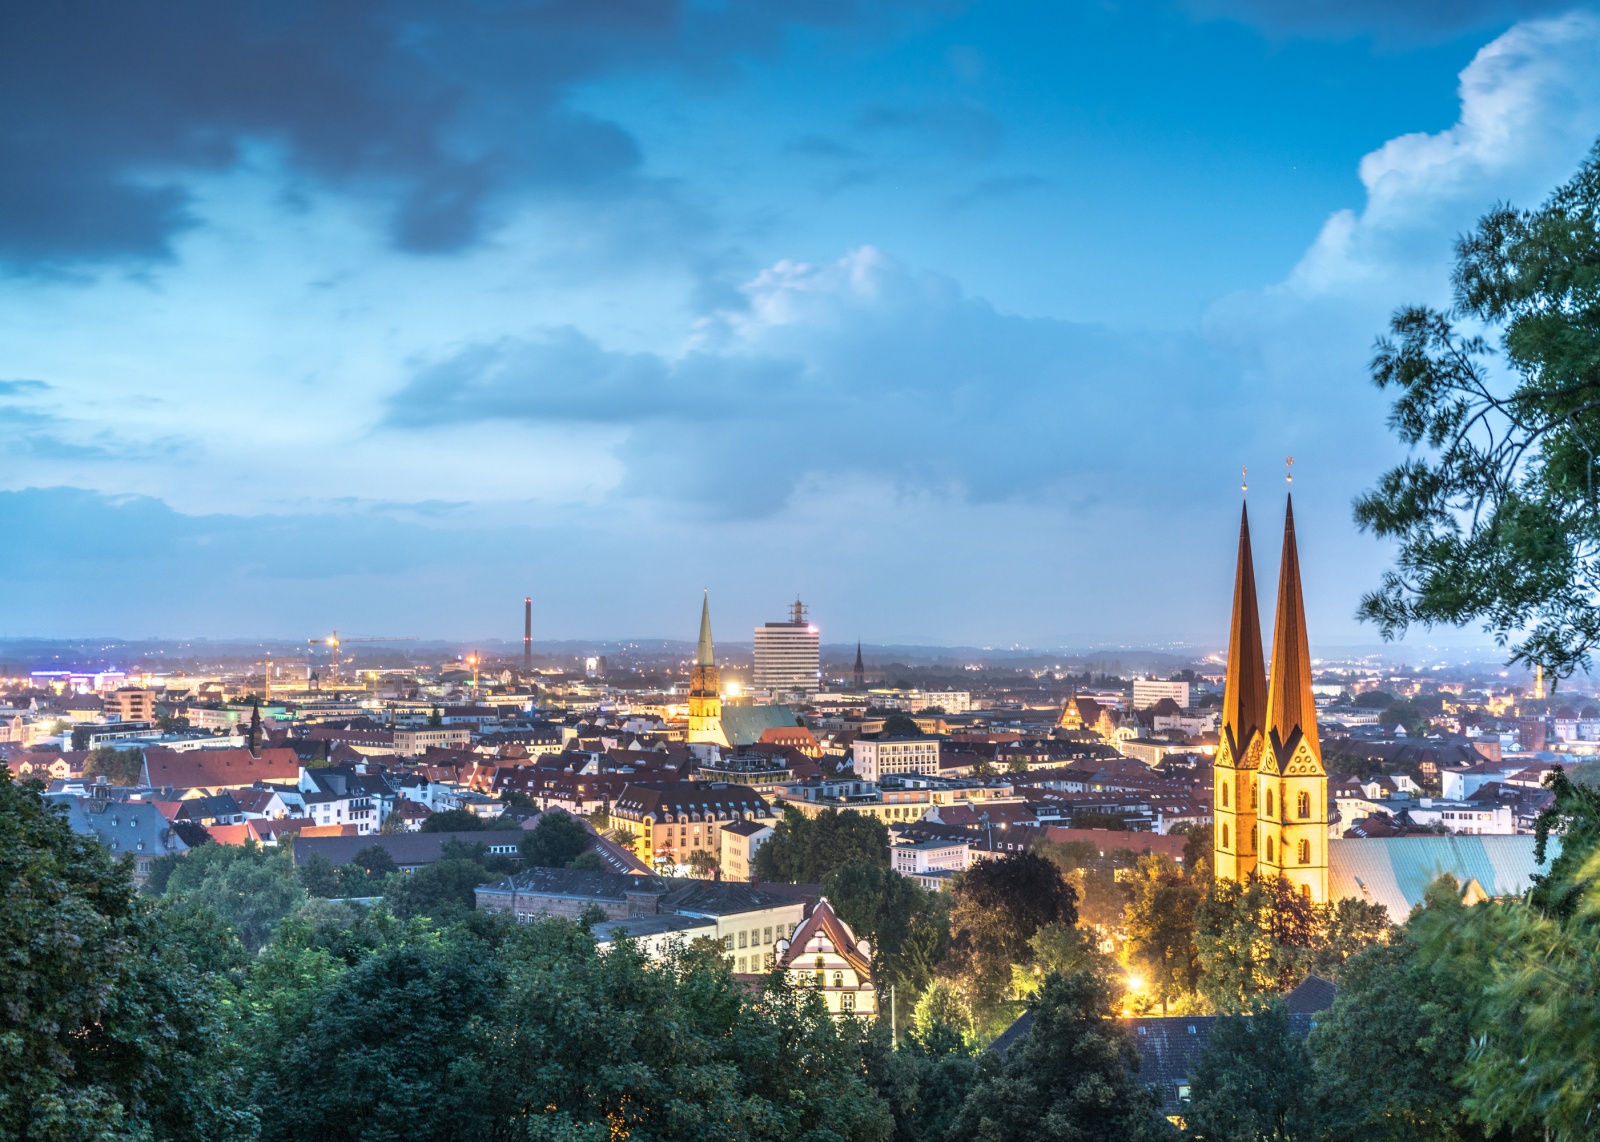 Bielefeld-Panorama-02.jpg